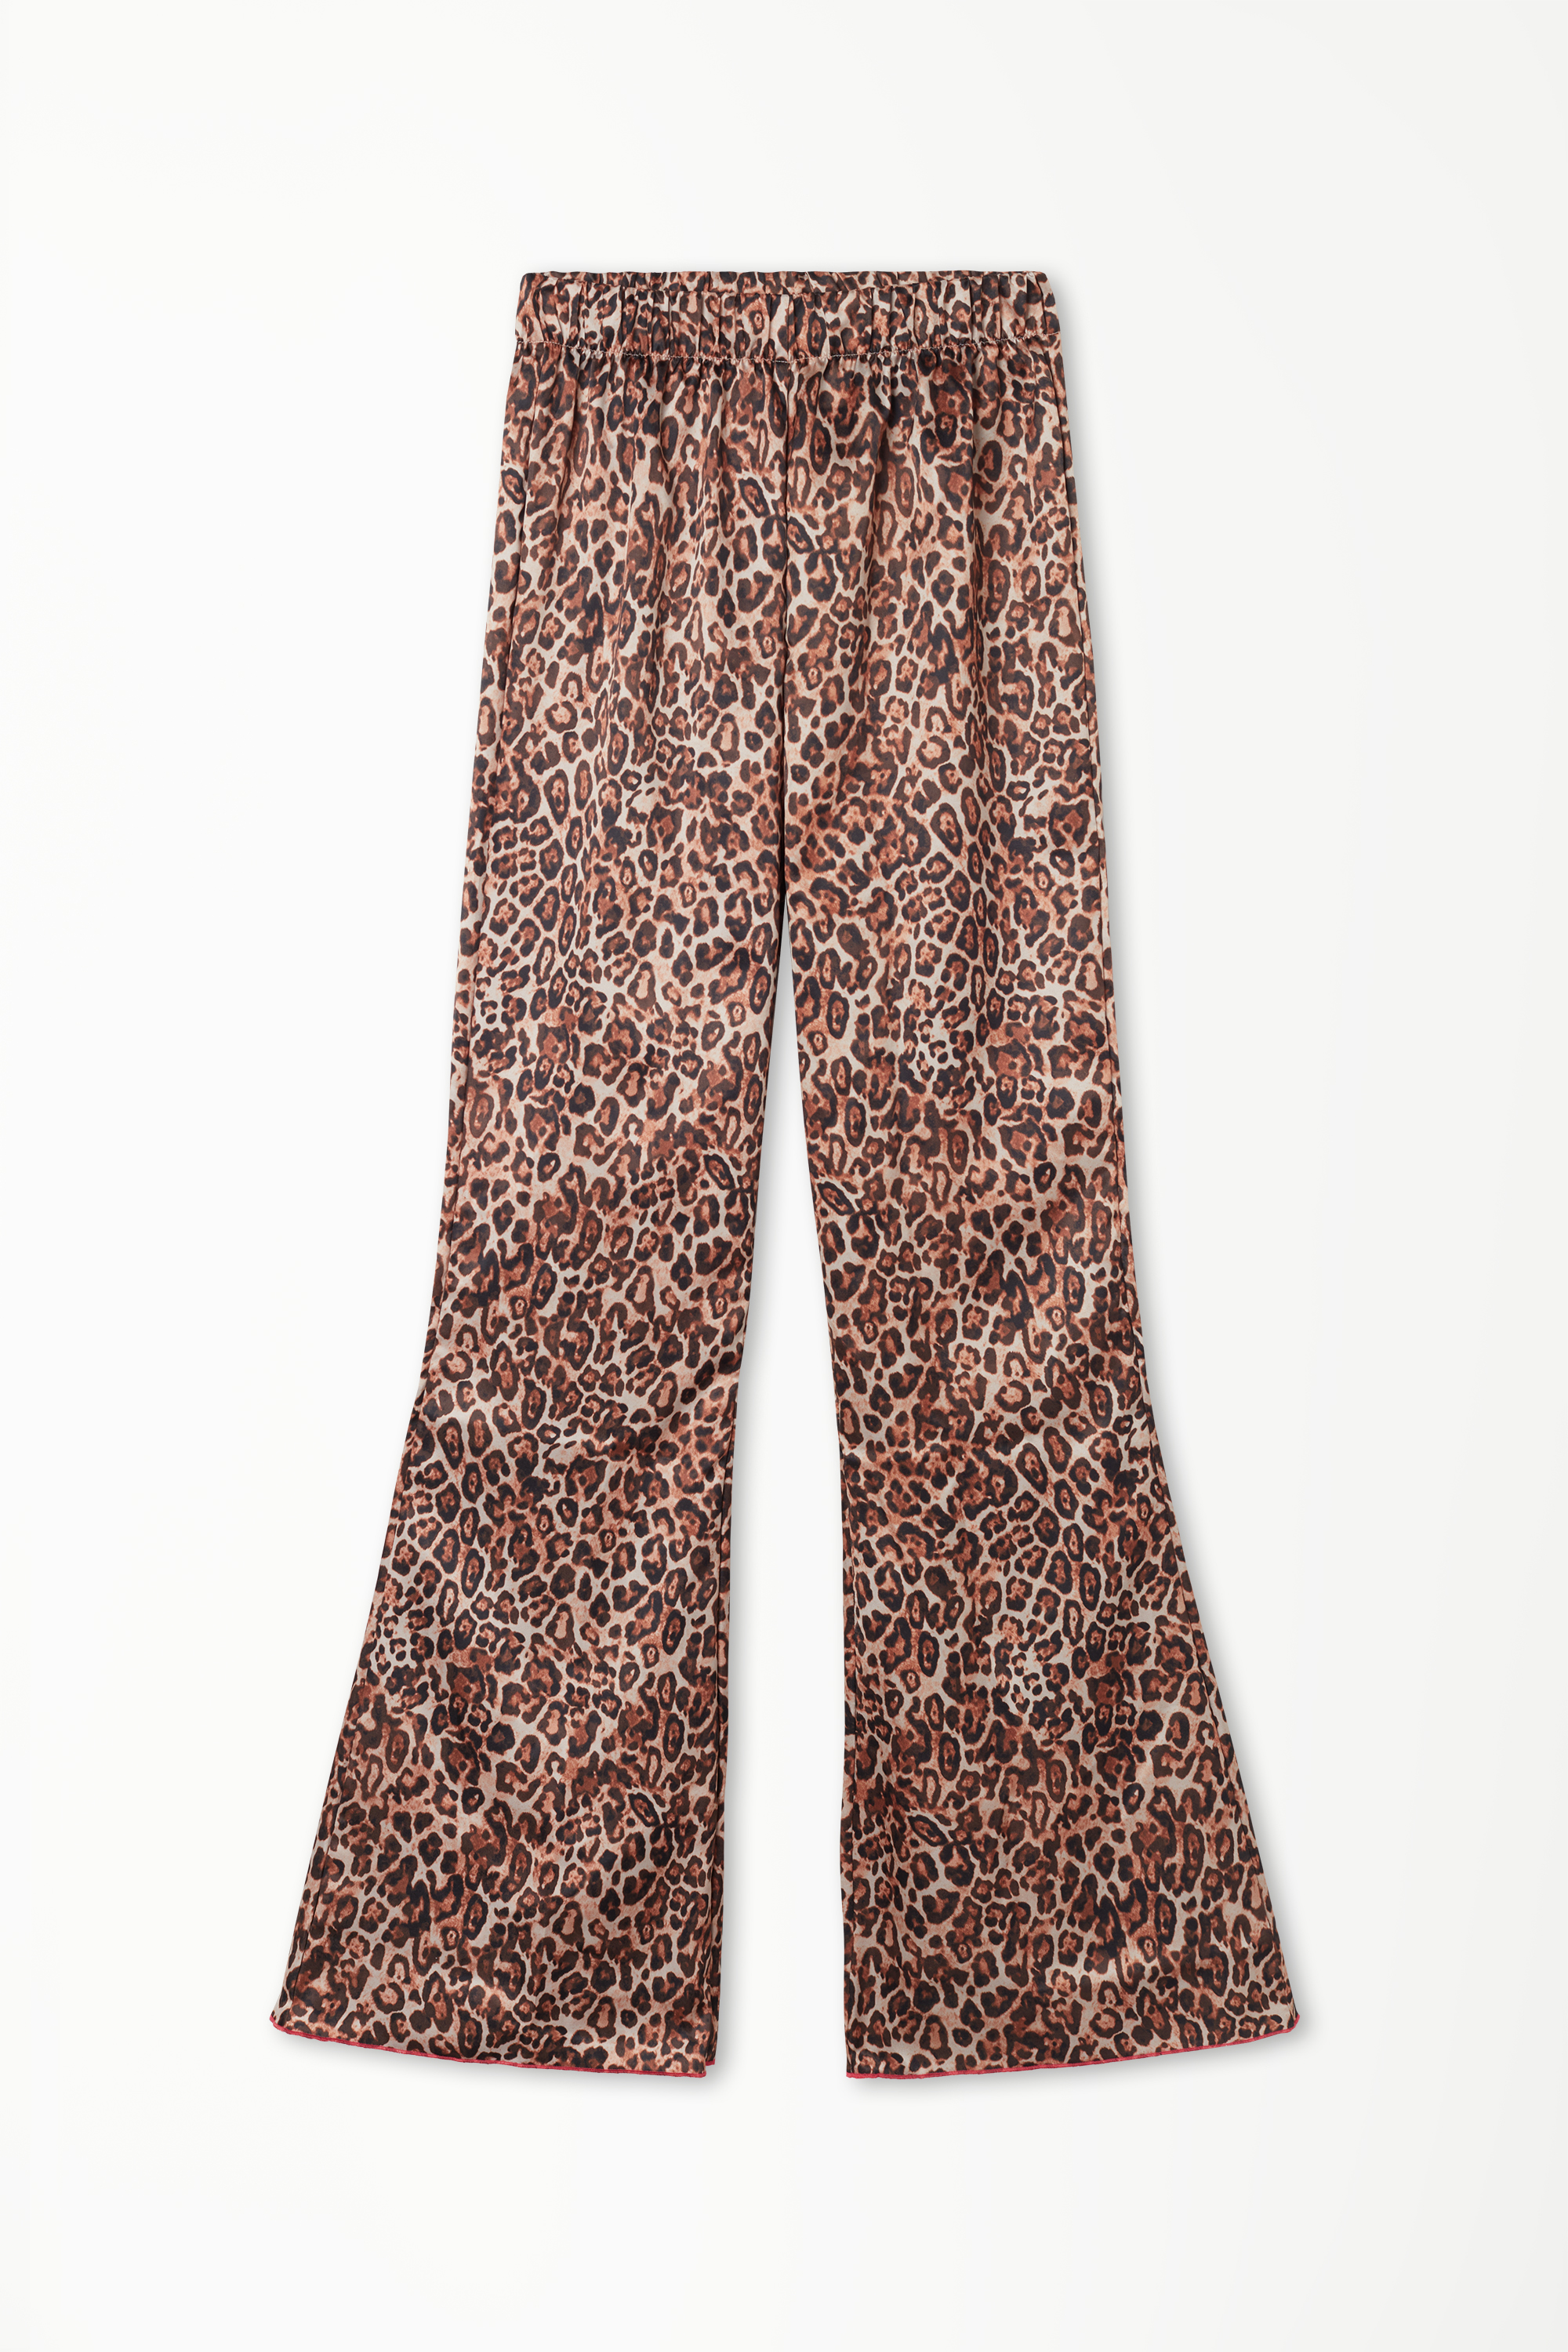 Strawberry Leopard Satin Pants